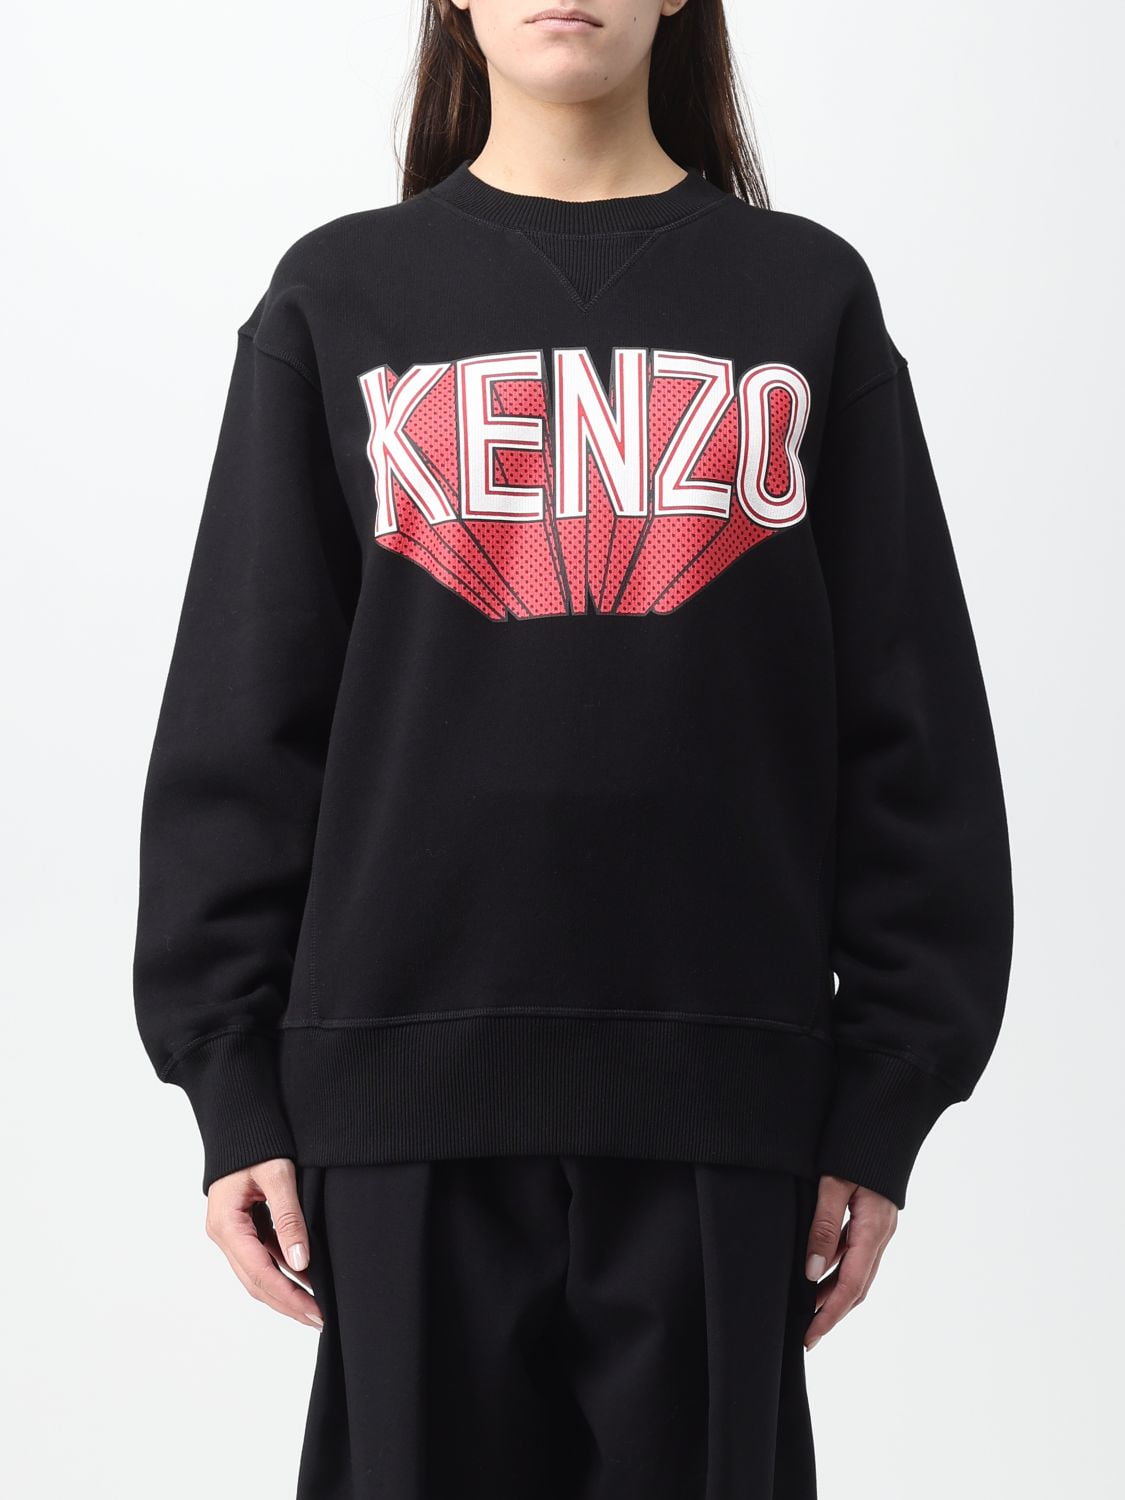 Kenzo Sweatshirt Woman Black Woman - Walmart.com